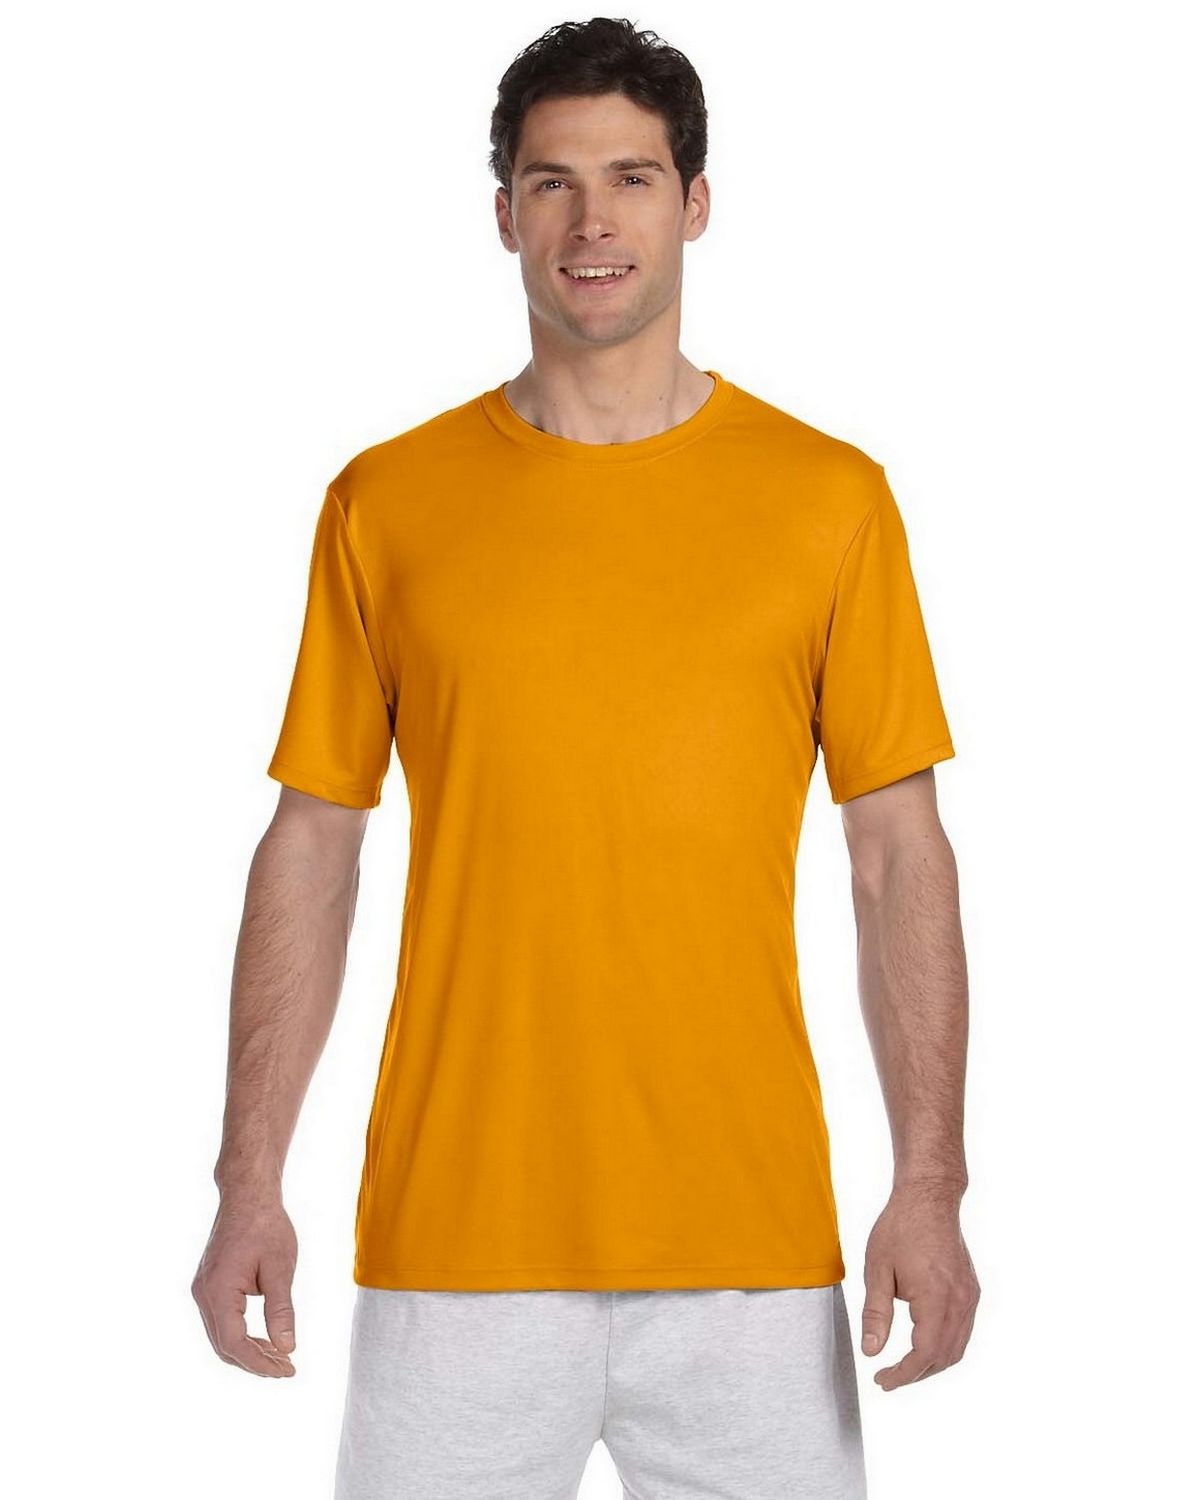 Hanes 4820 Cool Dri T Shirt - ApparelnBags.com